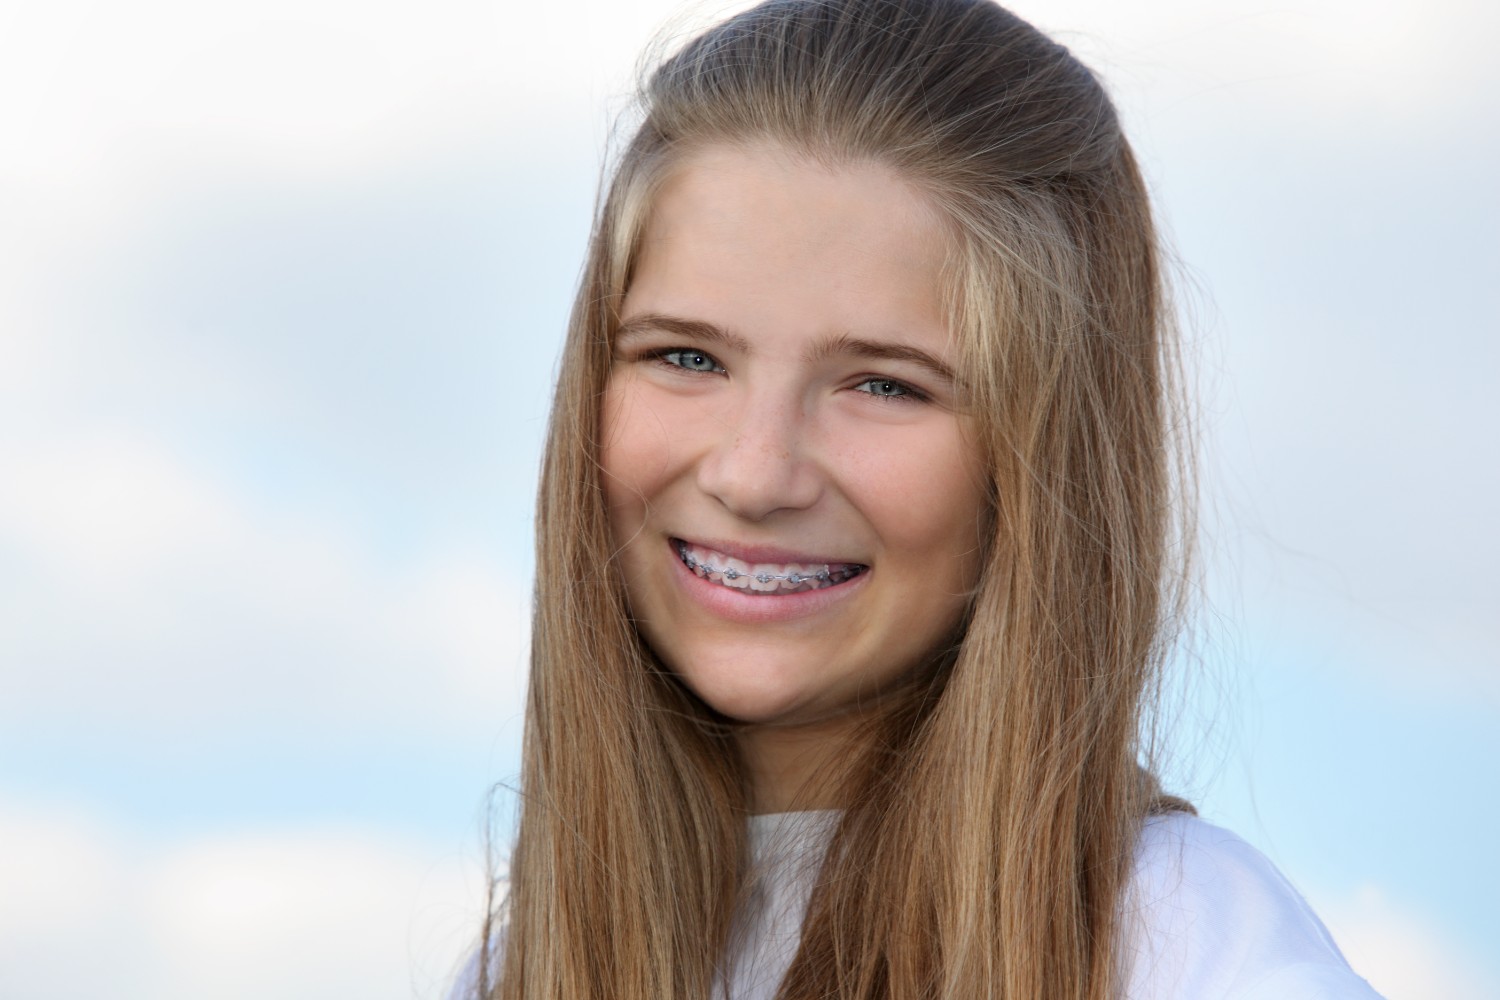 teen girl with braces